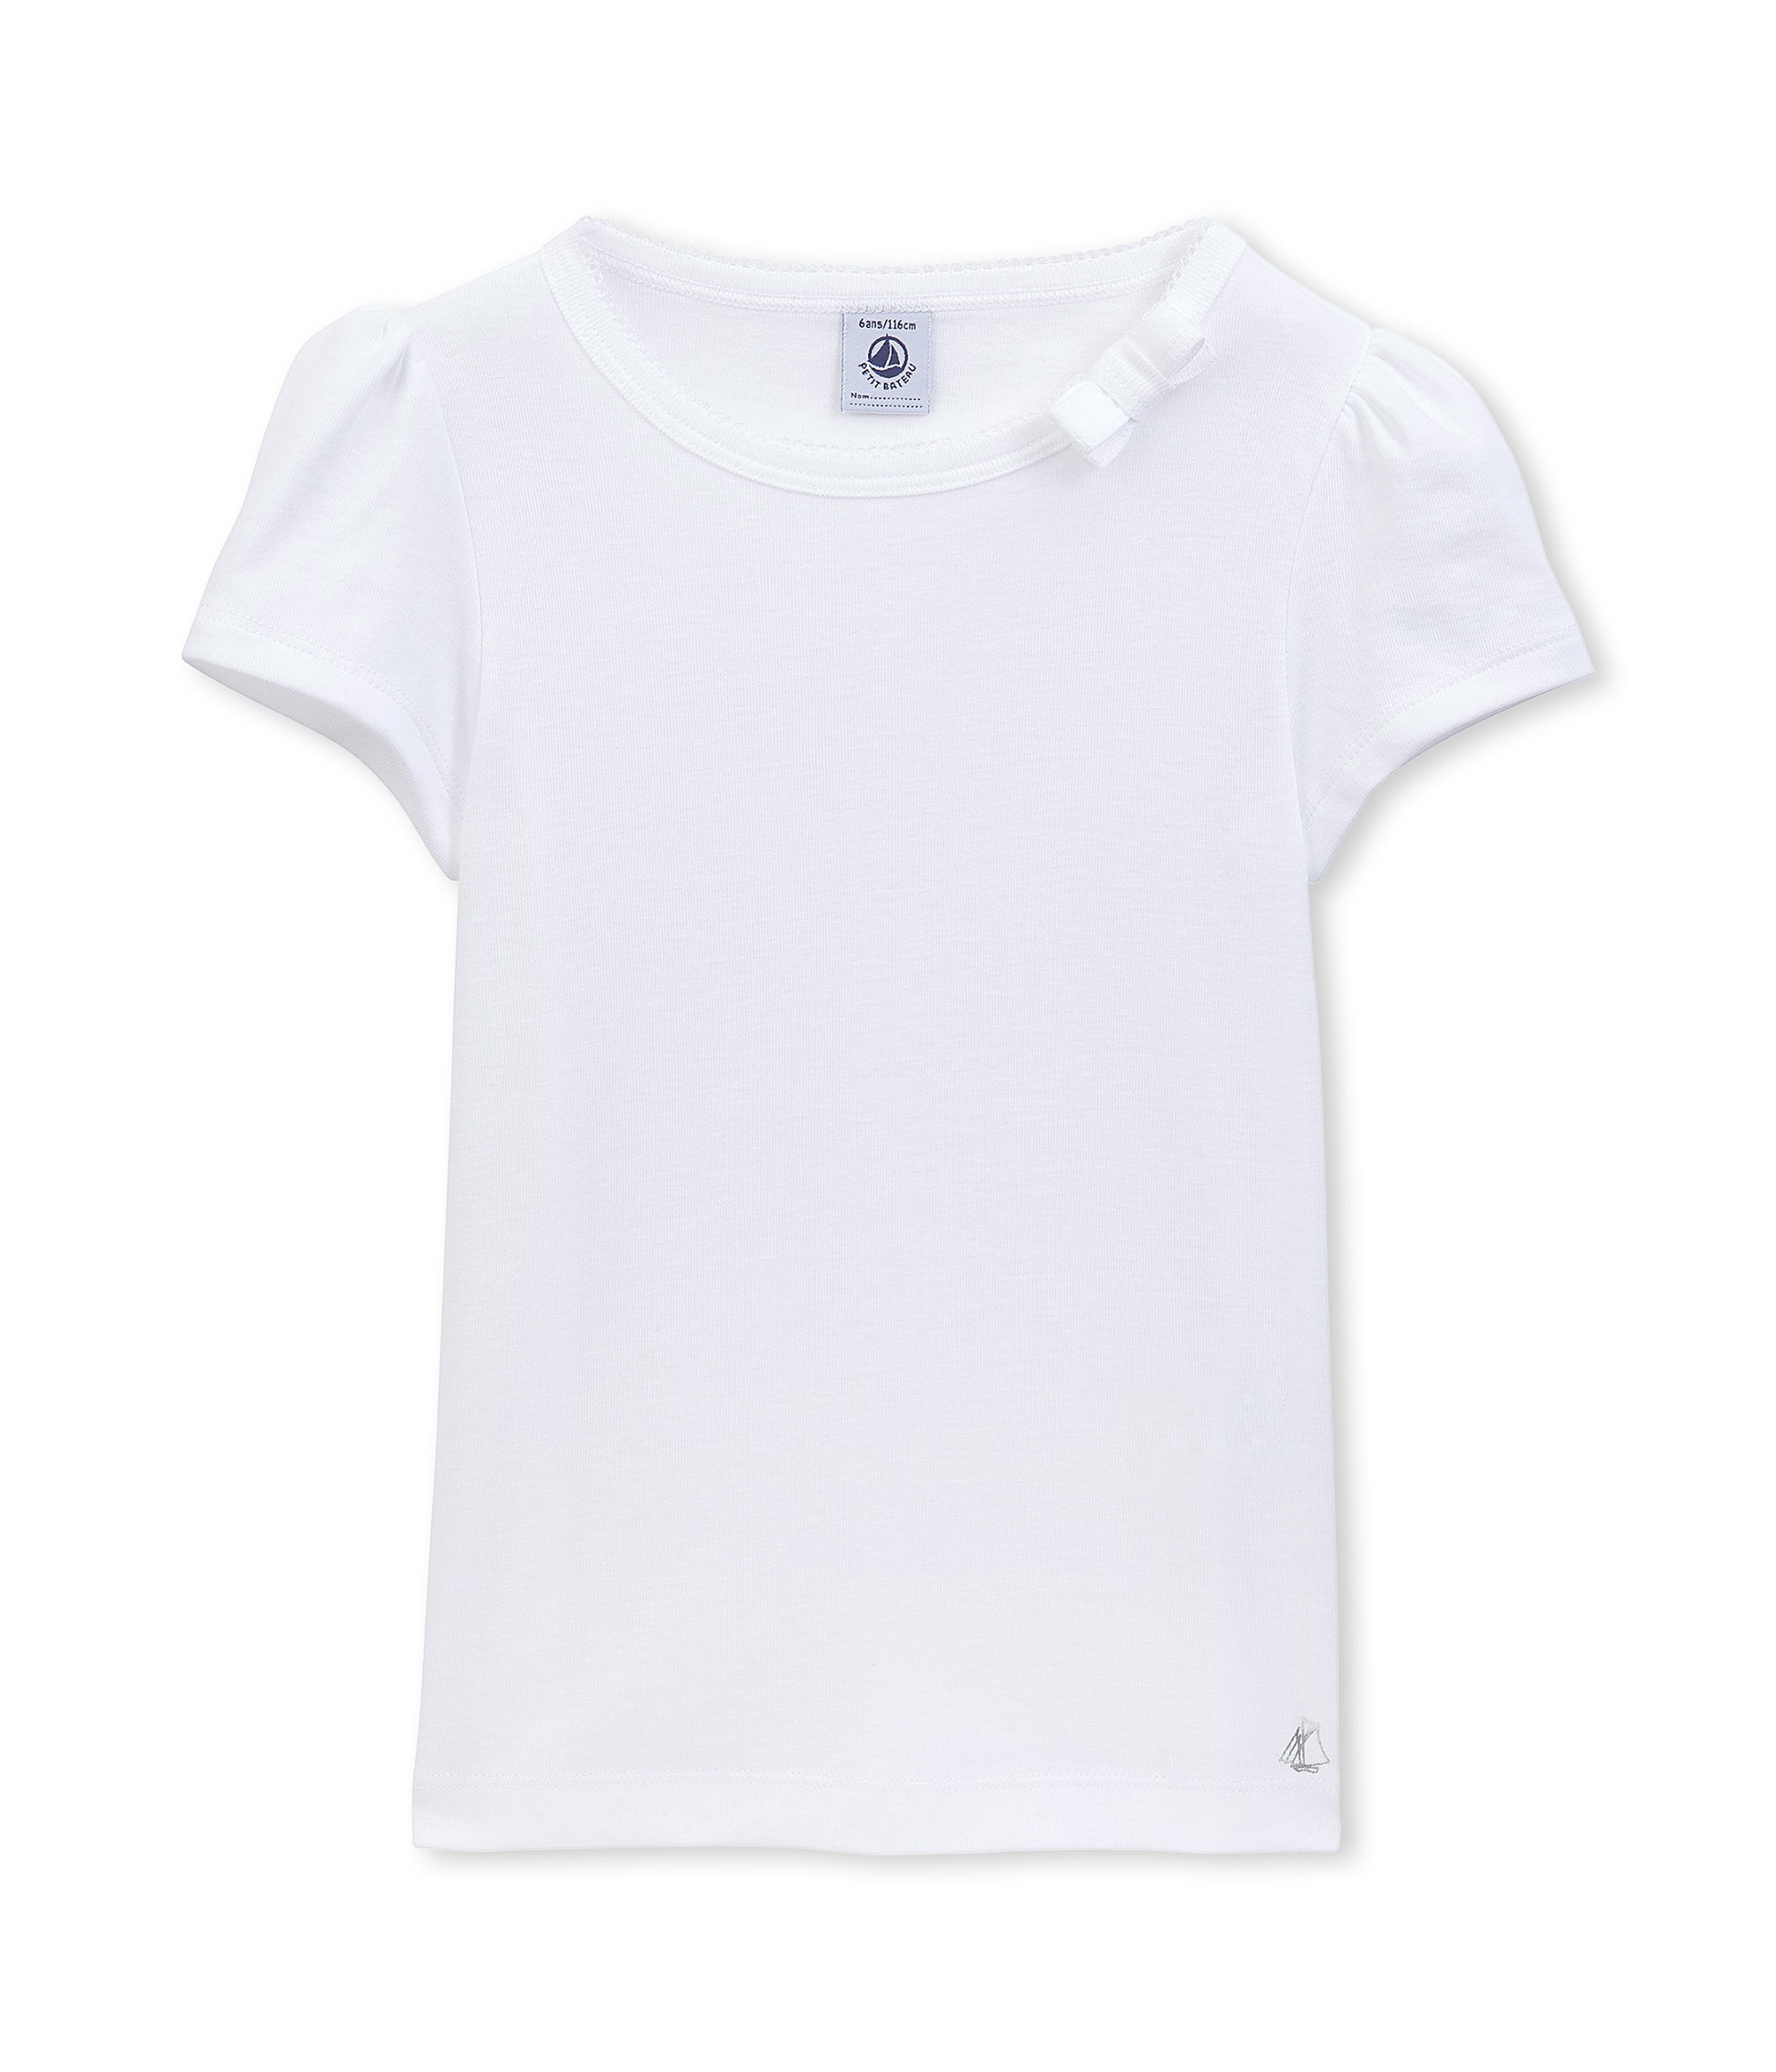 plain white shirt girls